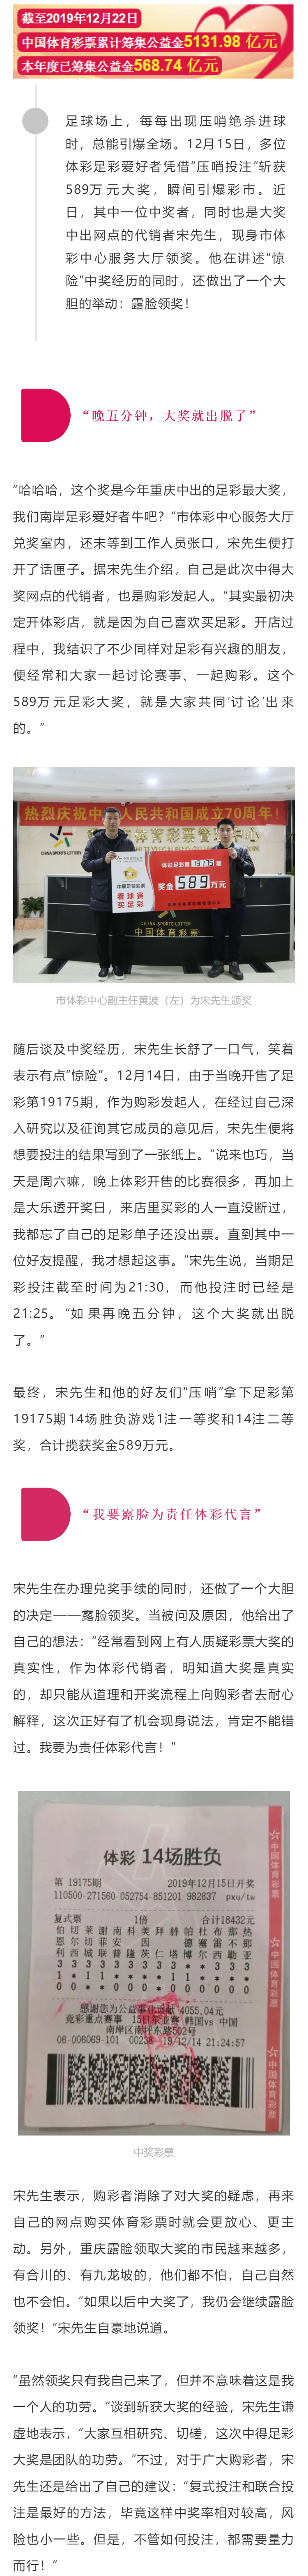 20191225_0925_yiban_screenshot.png